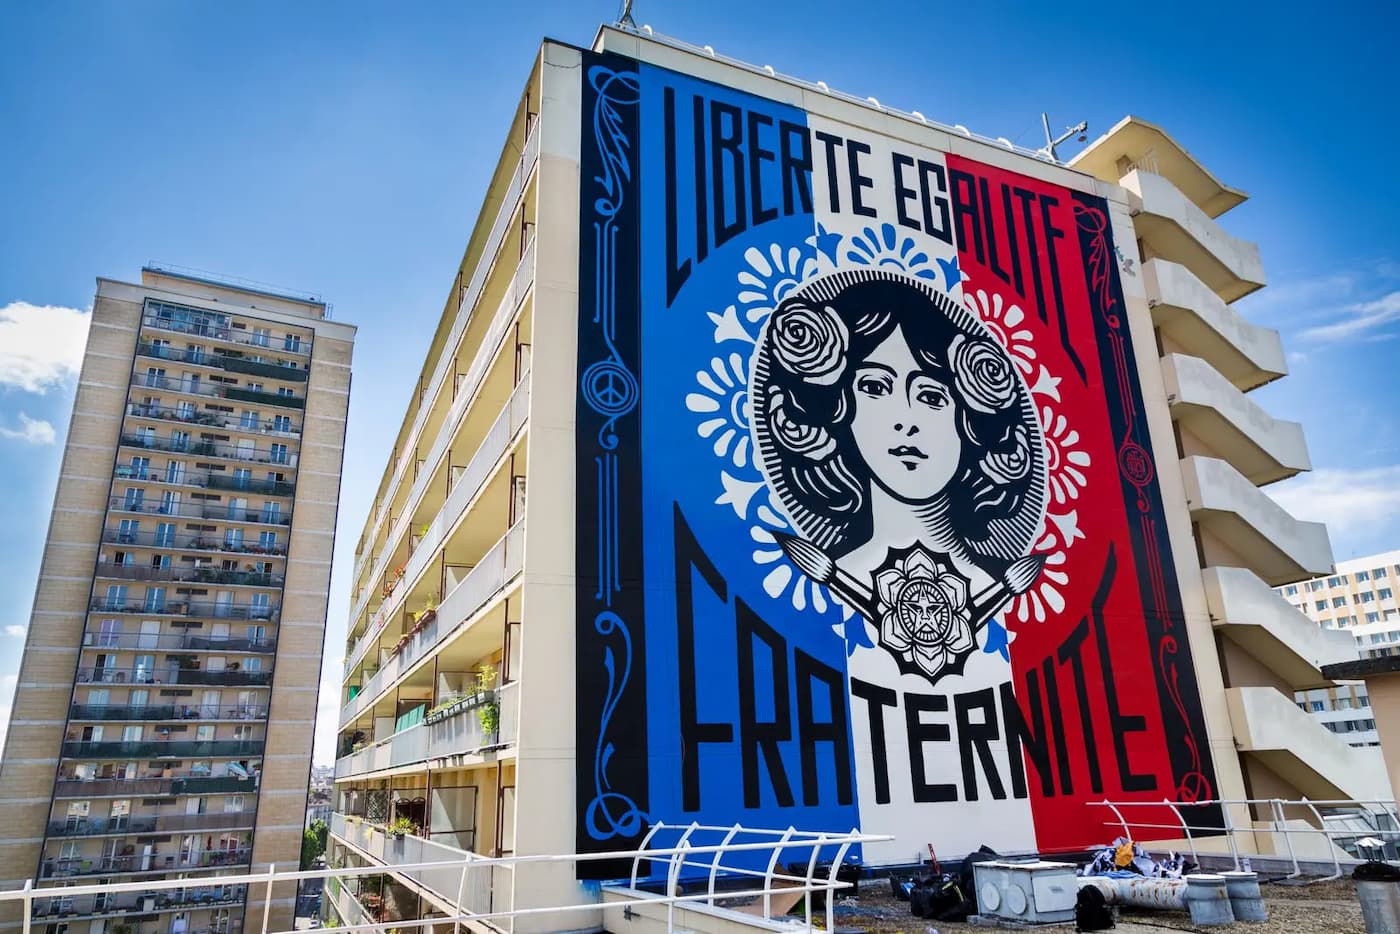 où voir du street art à paris